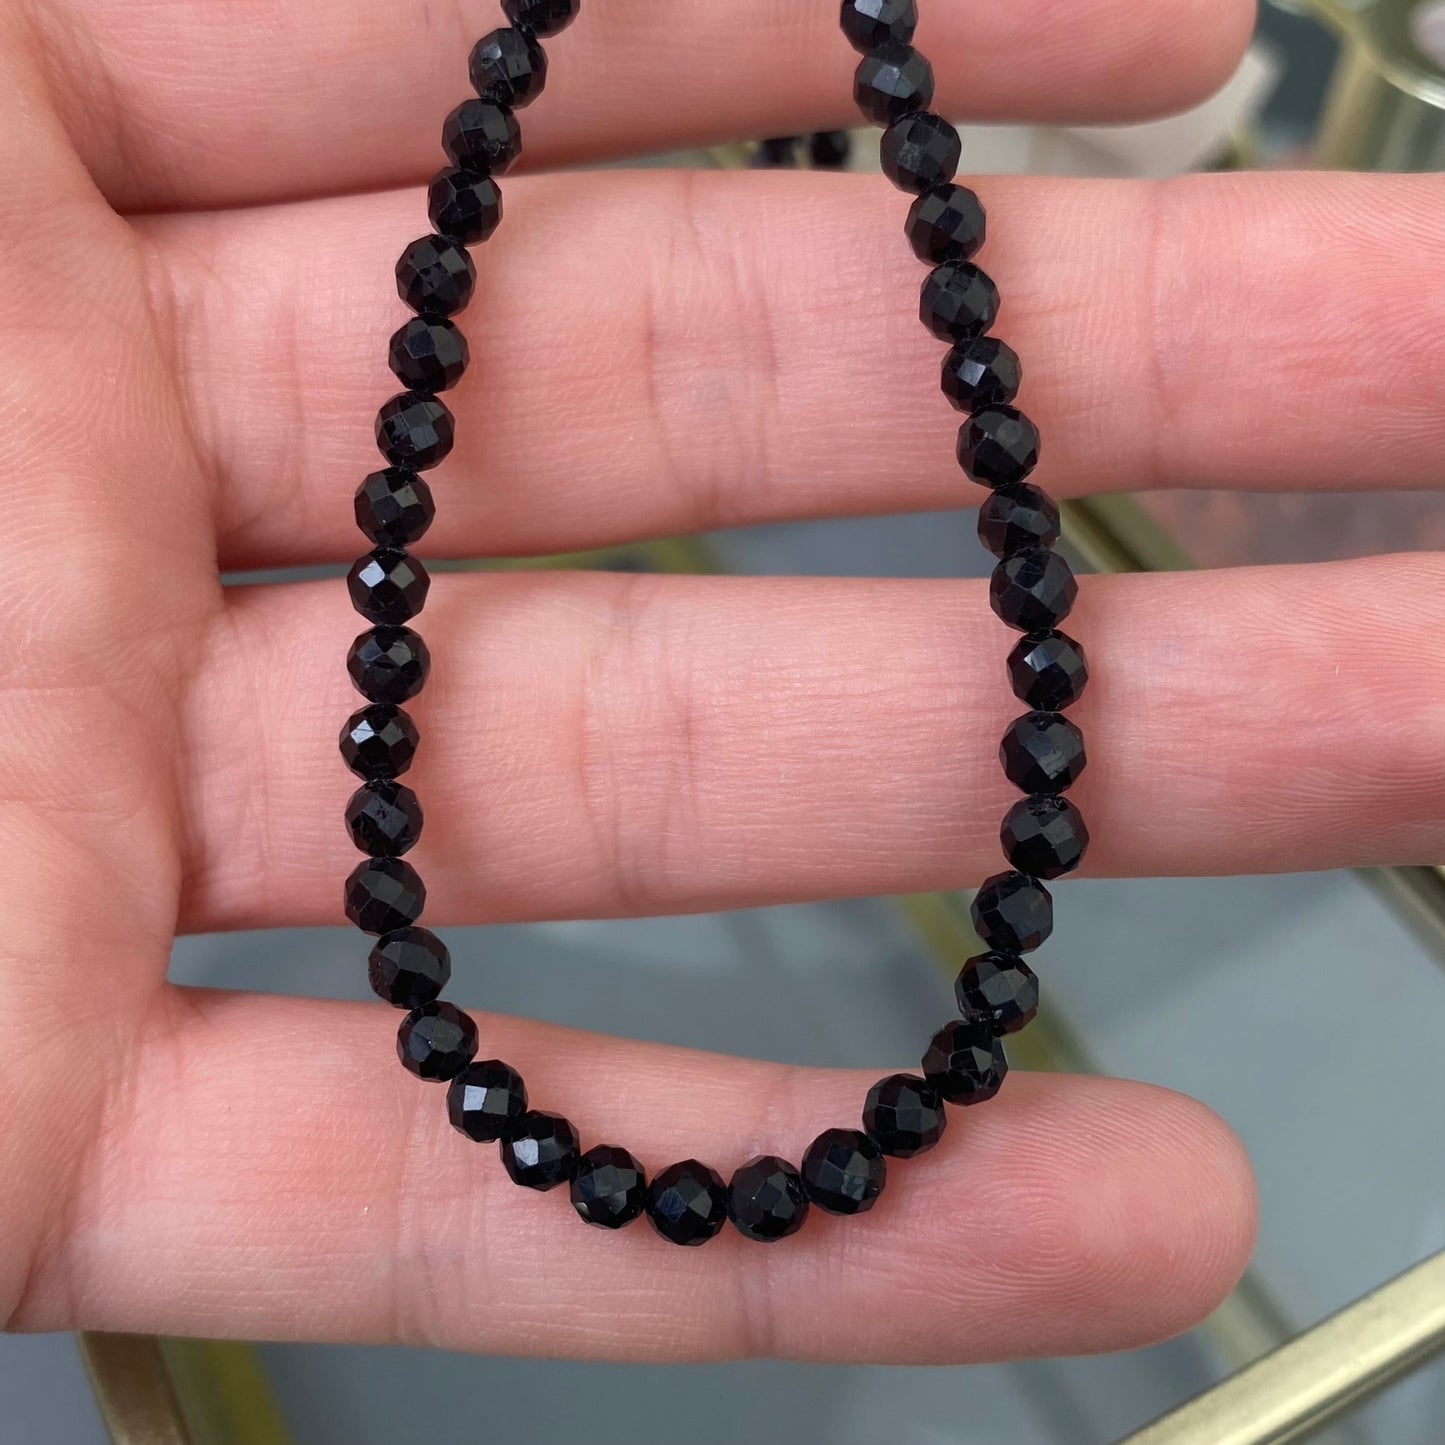 Black Tourmaline necklace (Black Tourmaline 4mm, polished shape, adjustable length: 40cm + chain 5cm)